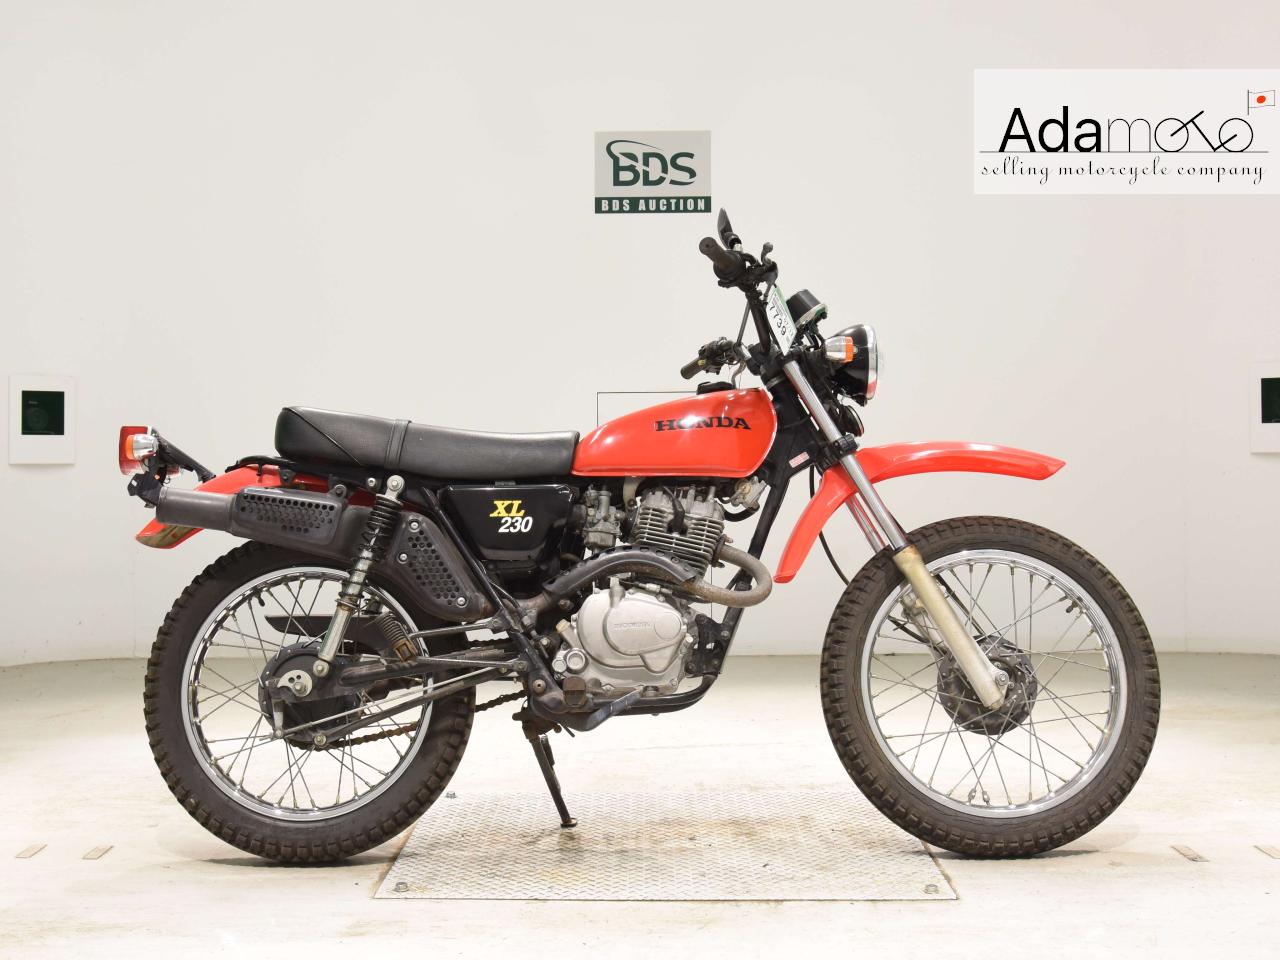 Honda XL230 - Adamoto - Motorcycles from Japan